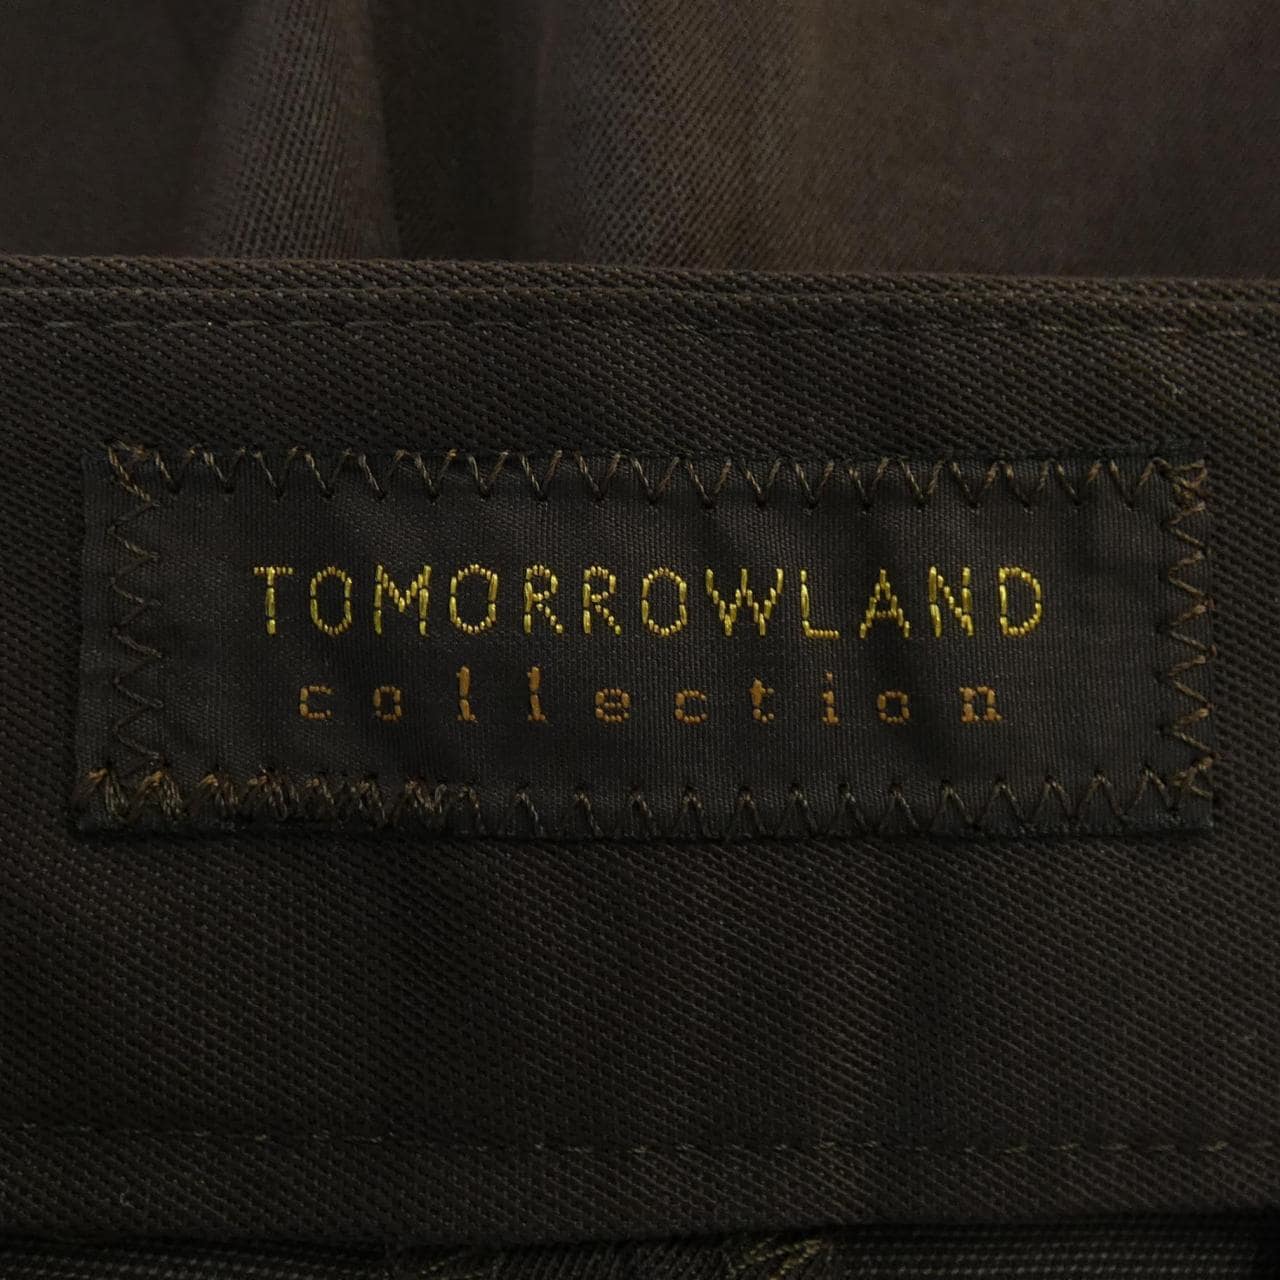 明日樂園TOMORROW LAND褲